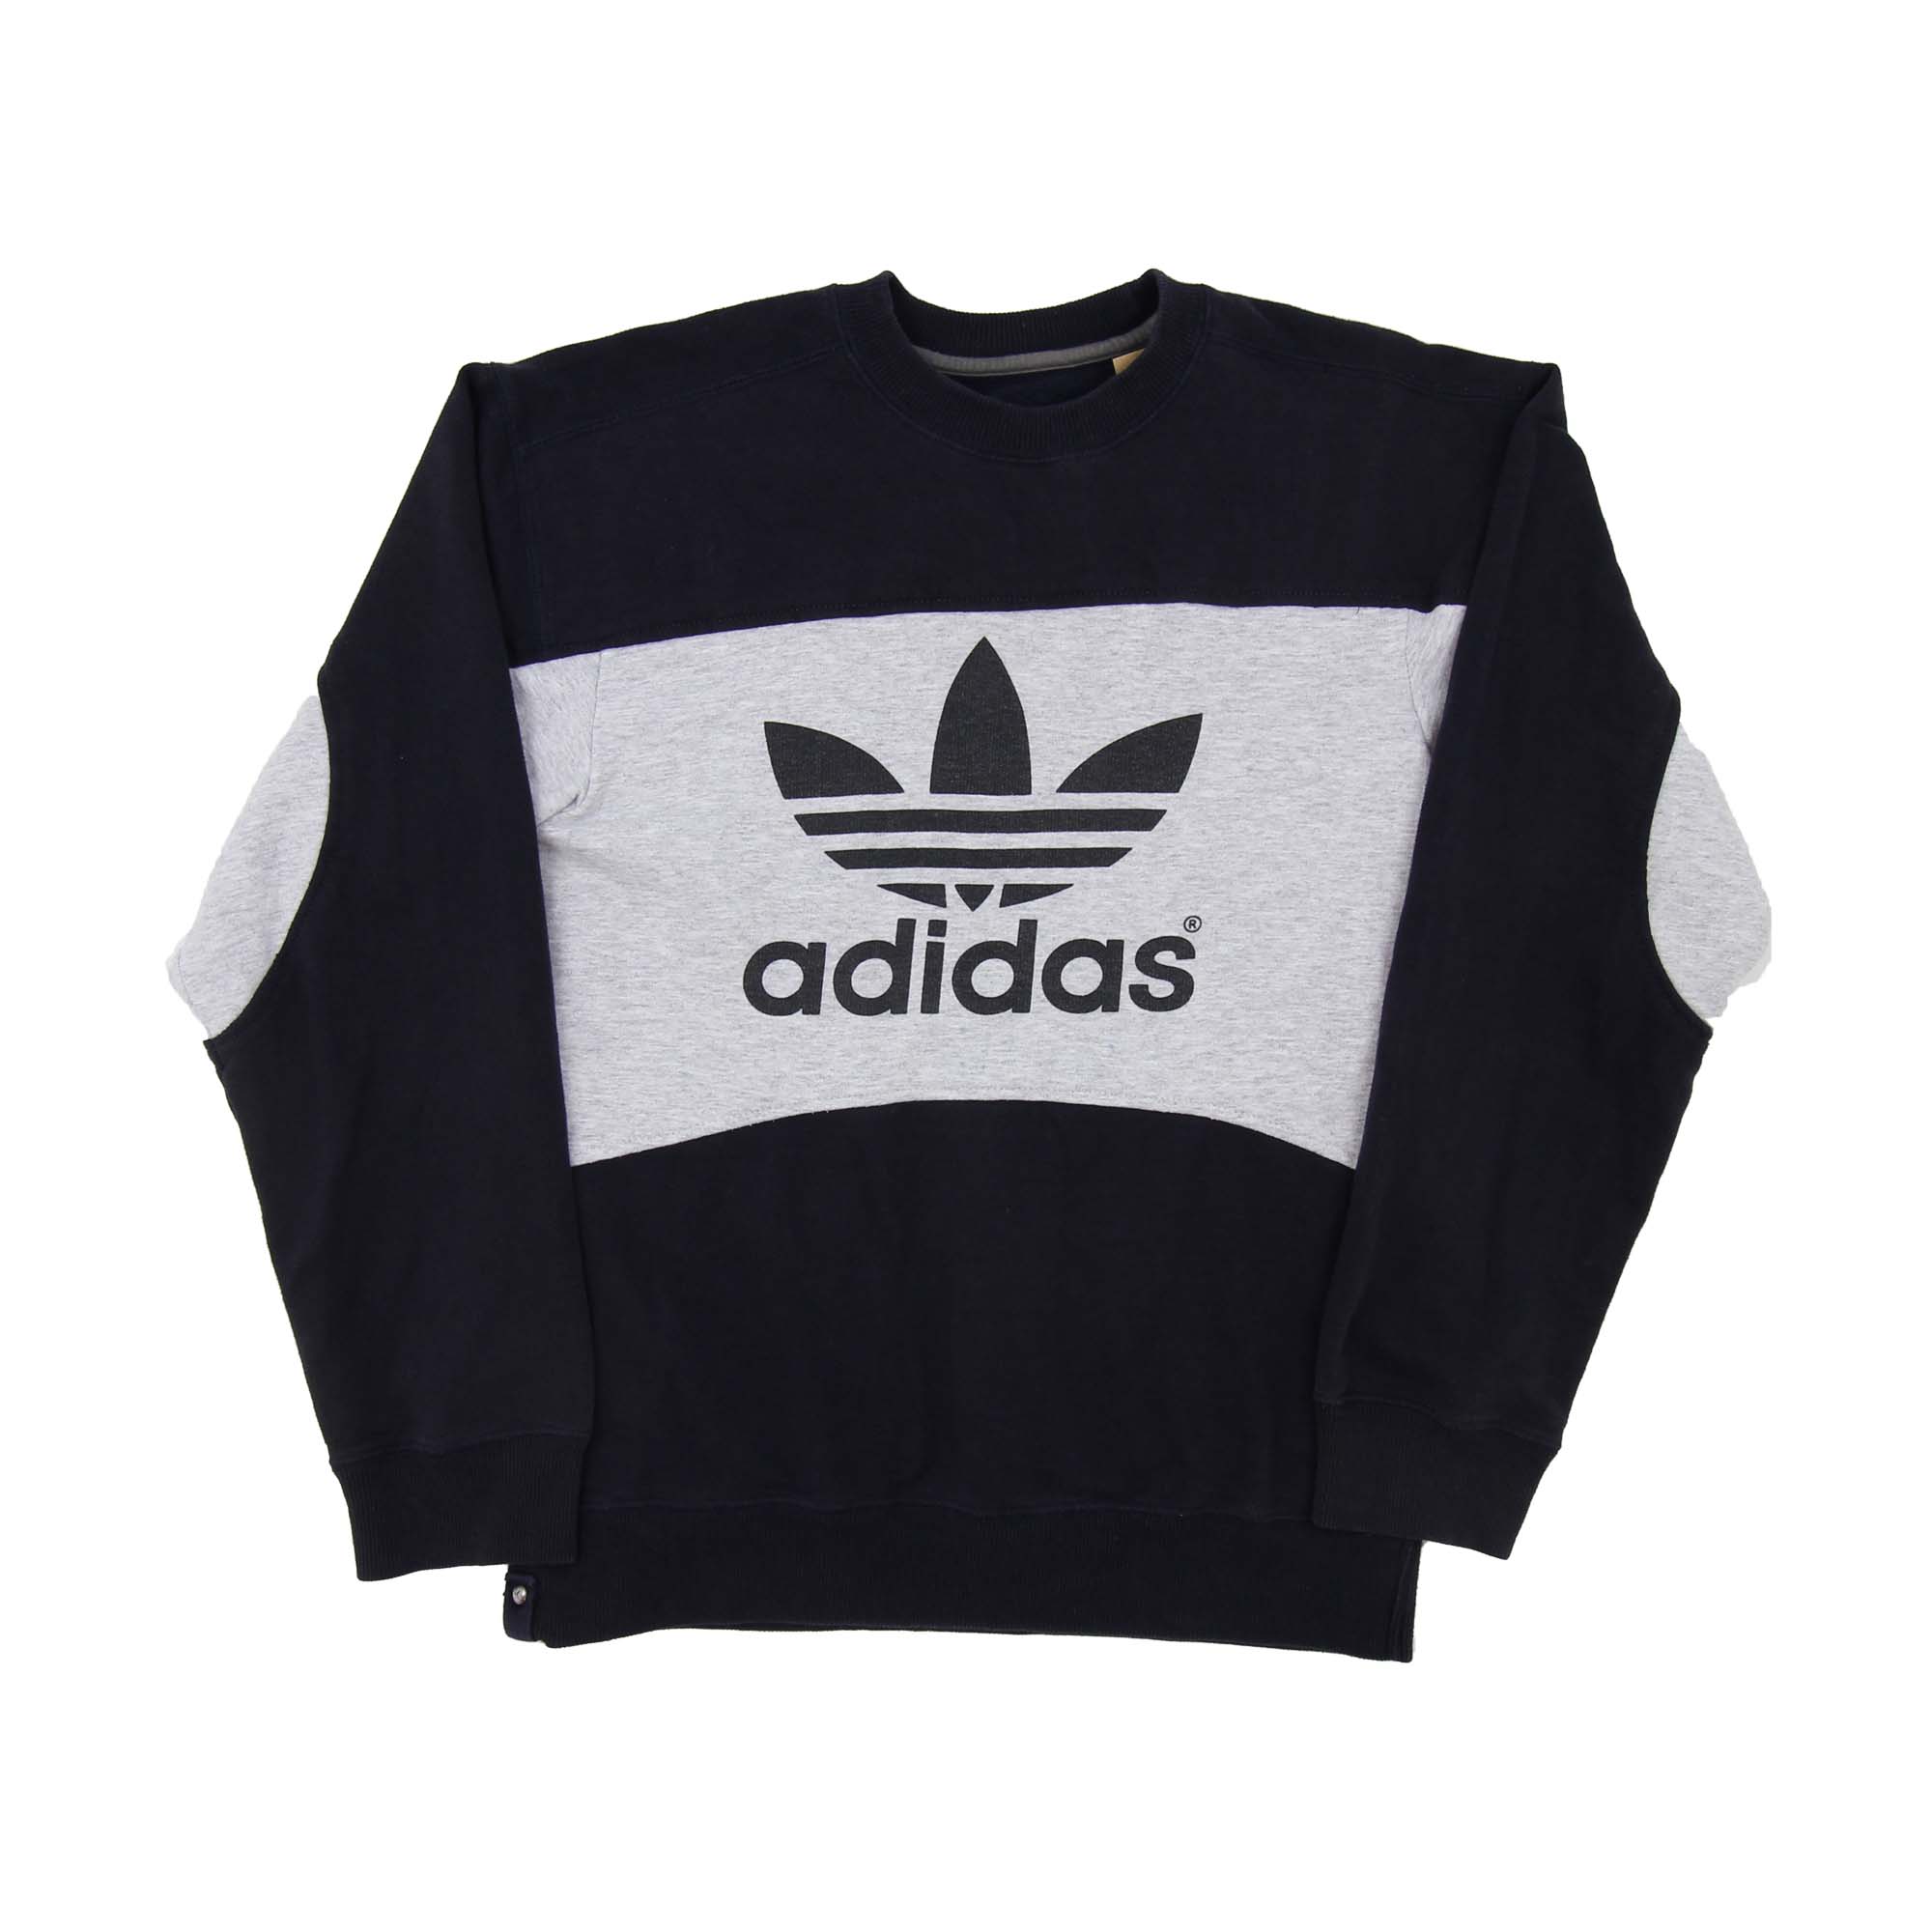 Adidas Rework Sweatshirt  -   S/M